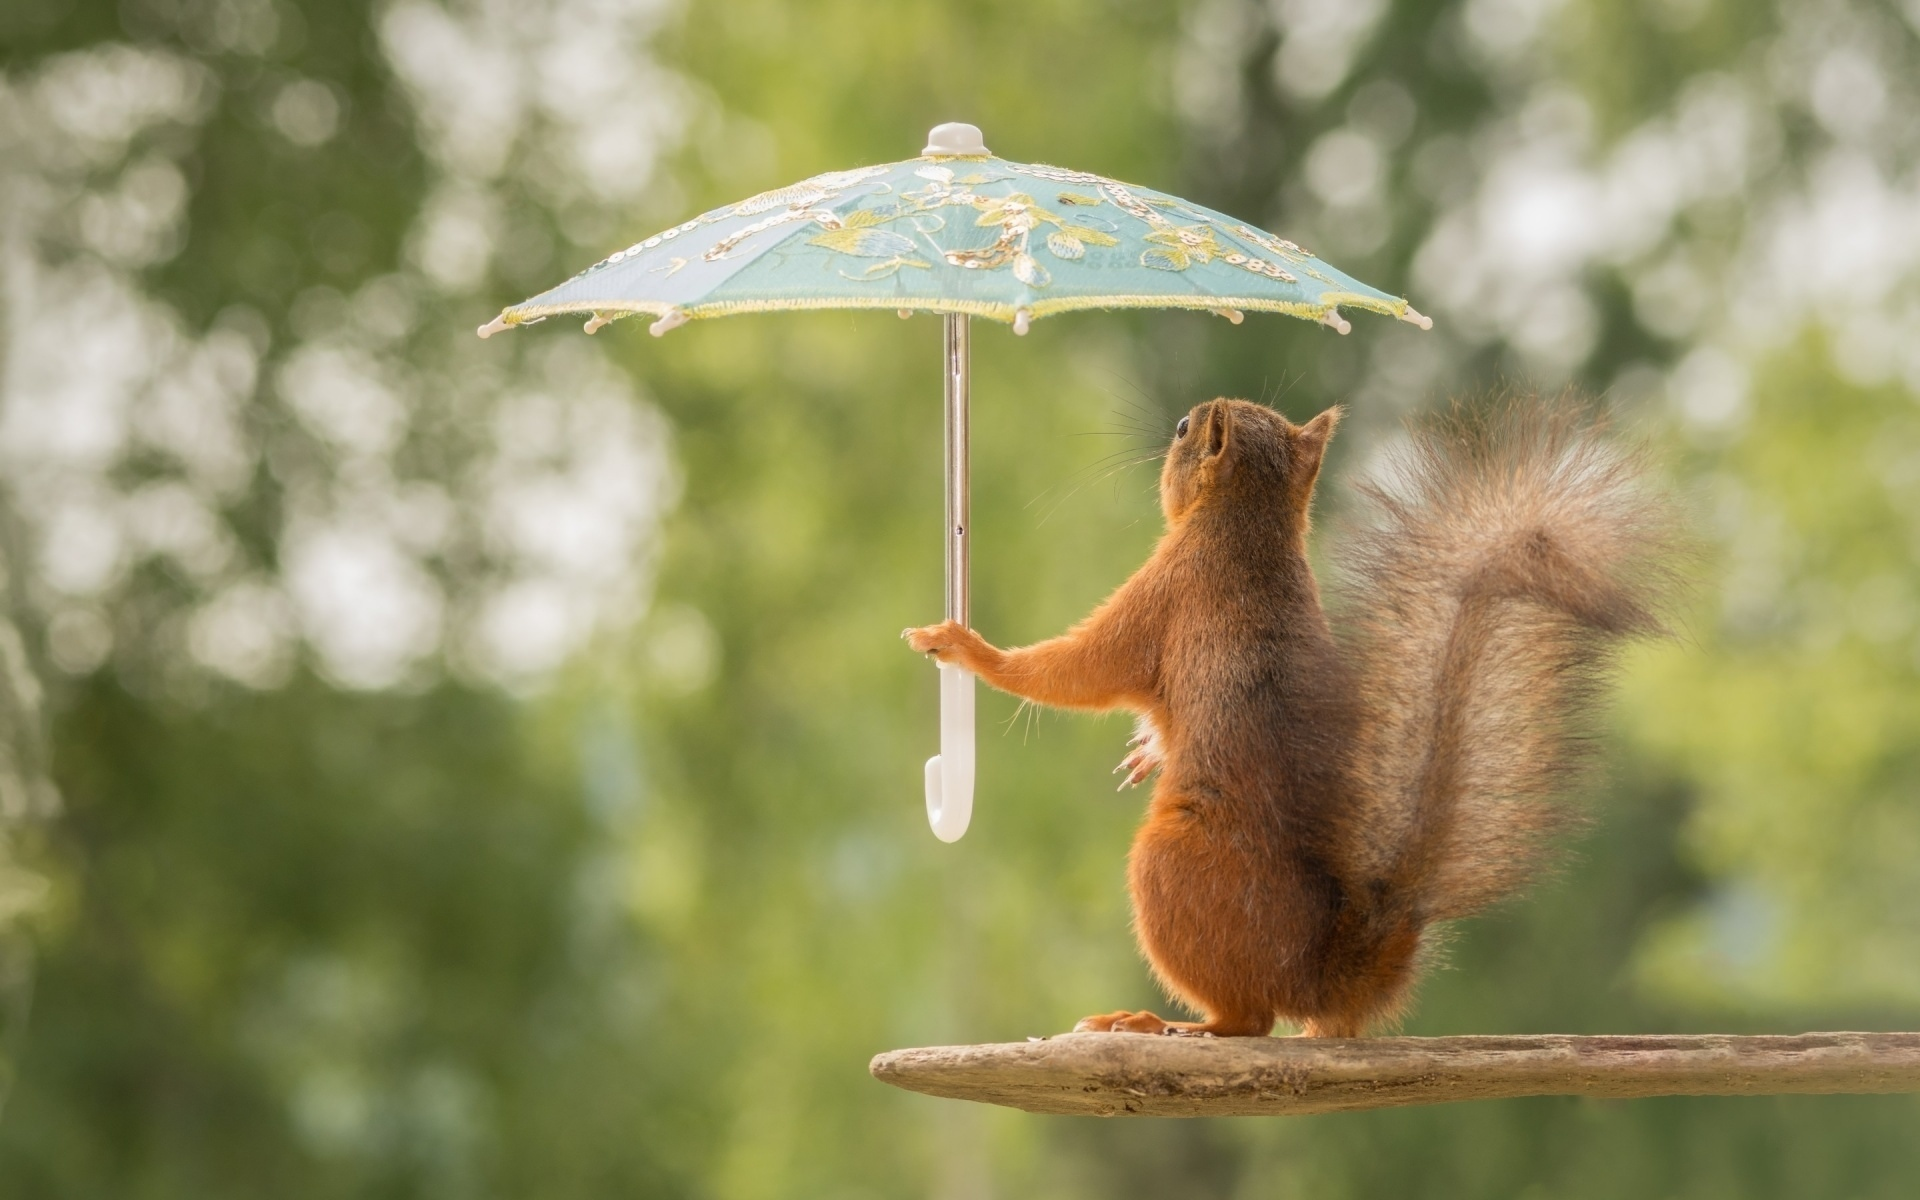 белка с зонтиком, белка, зонтик, лес, squirrel with umbrella, squirrel, umbrella, woods, rain, grass, dreen, light, see, nice, wide